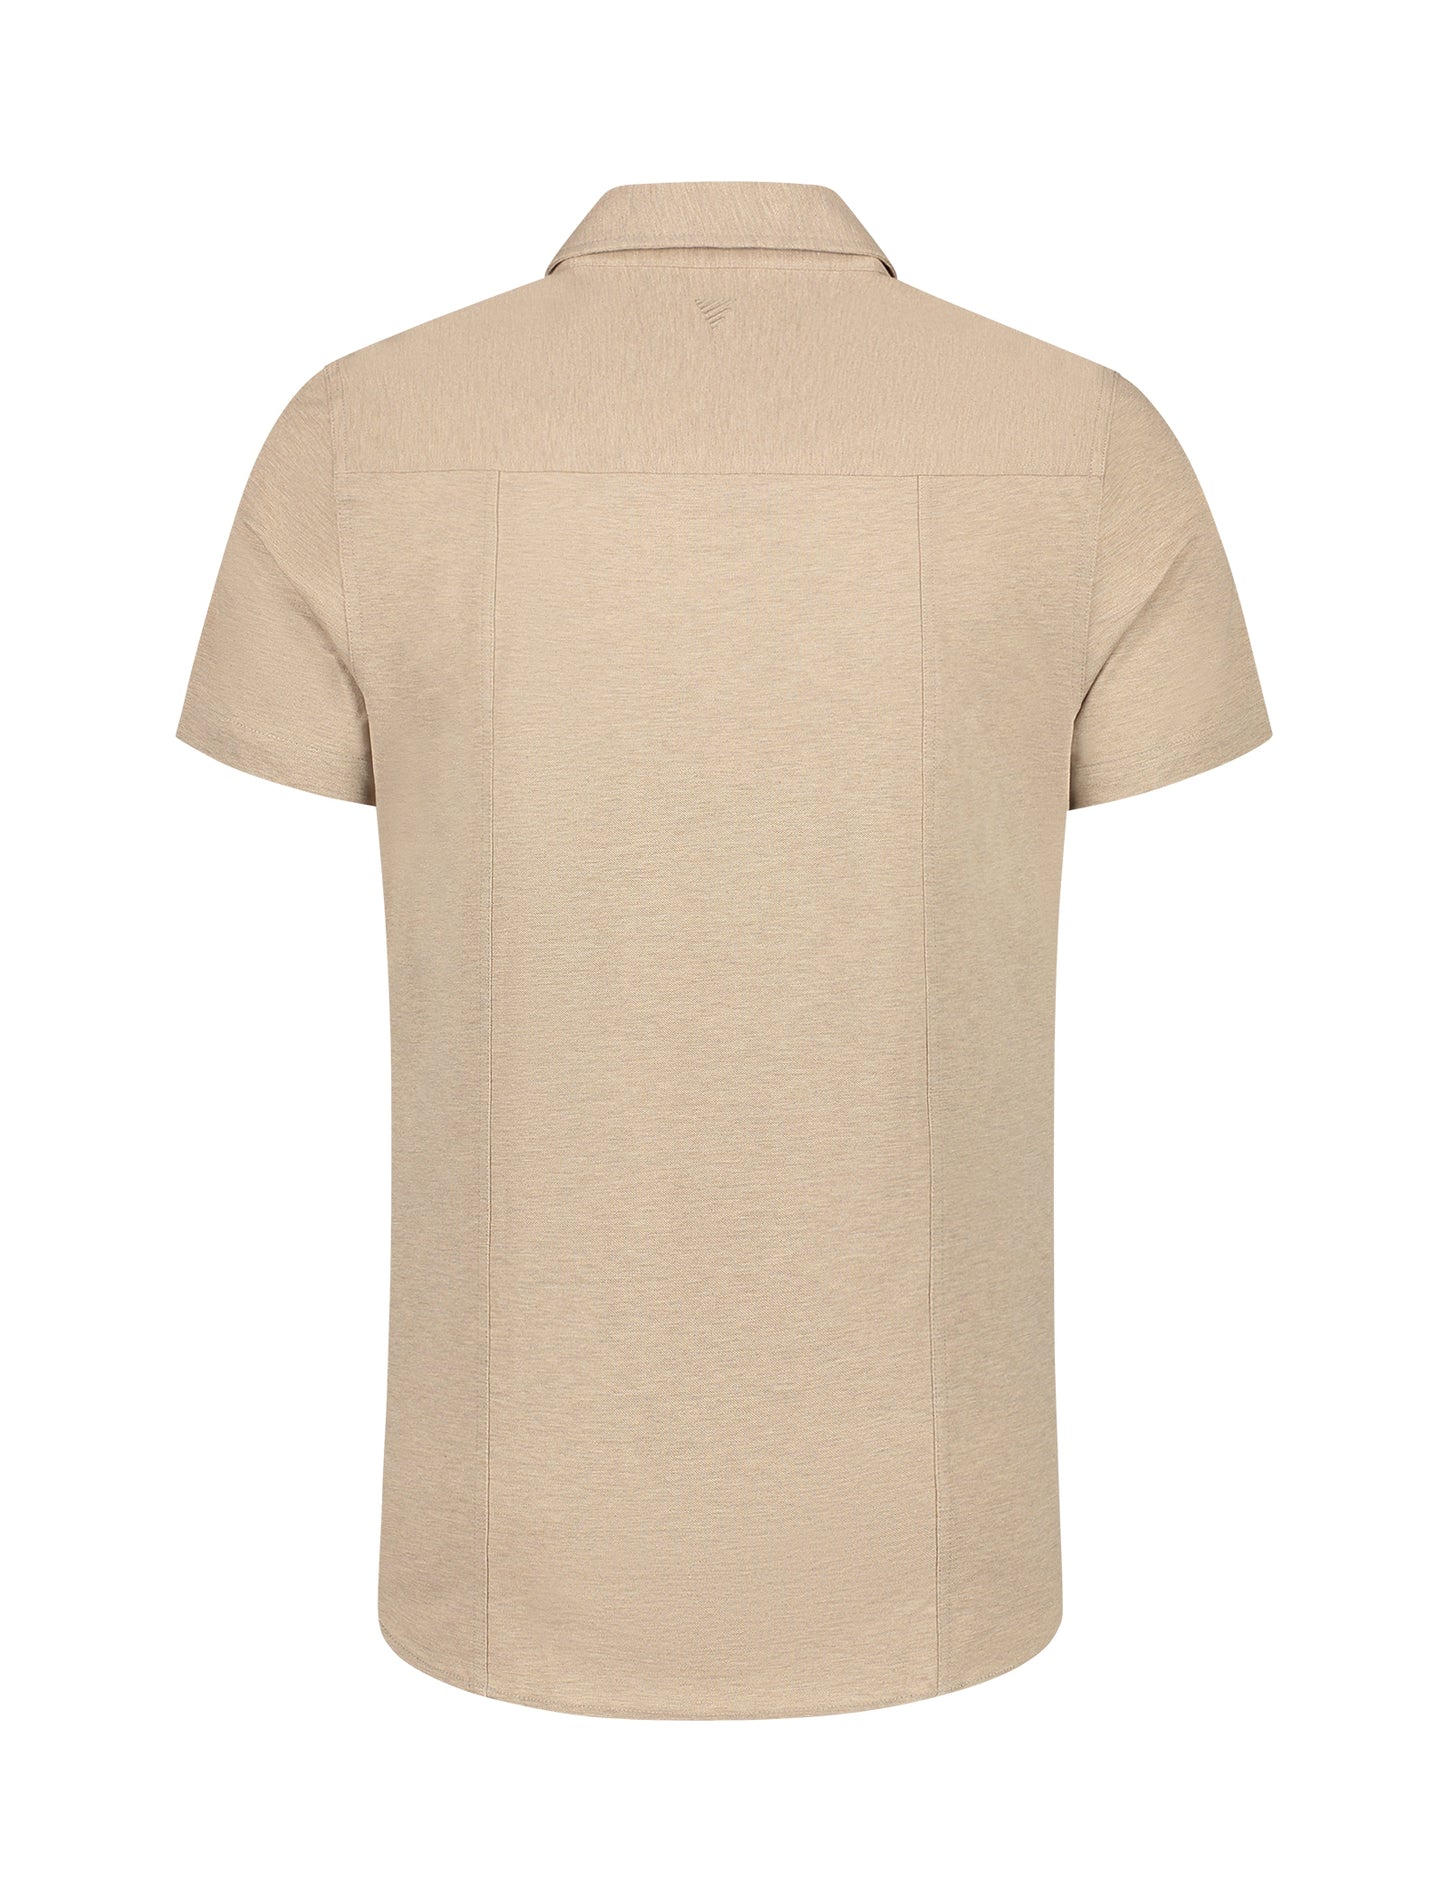 PURE PATH | Pique Shortsleeve Shirt - Sand